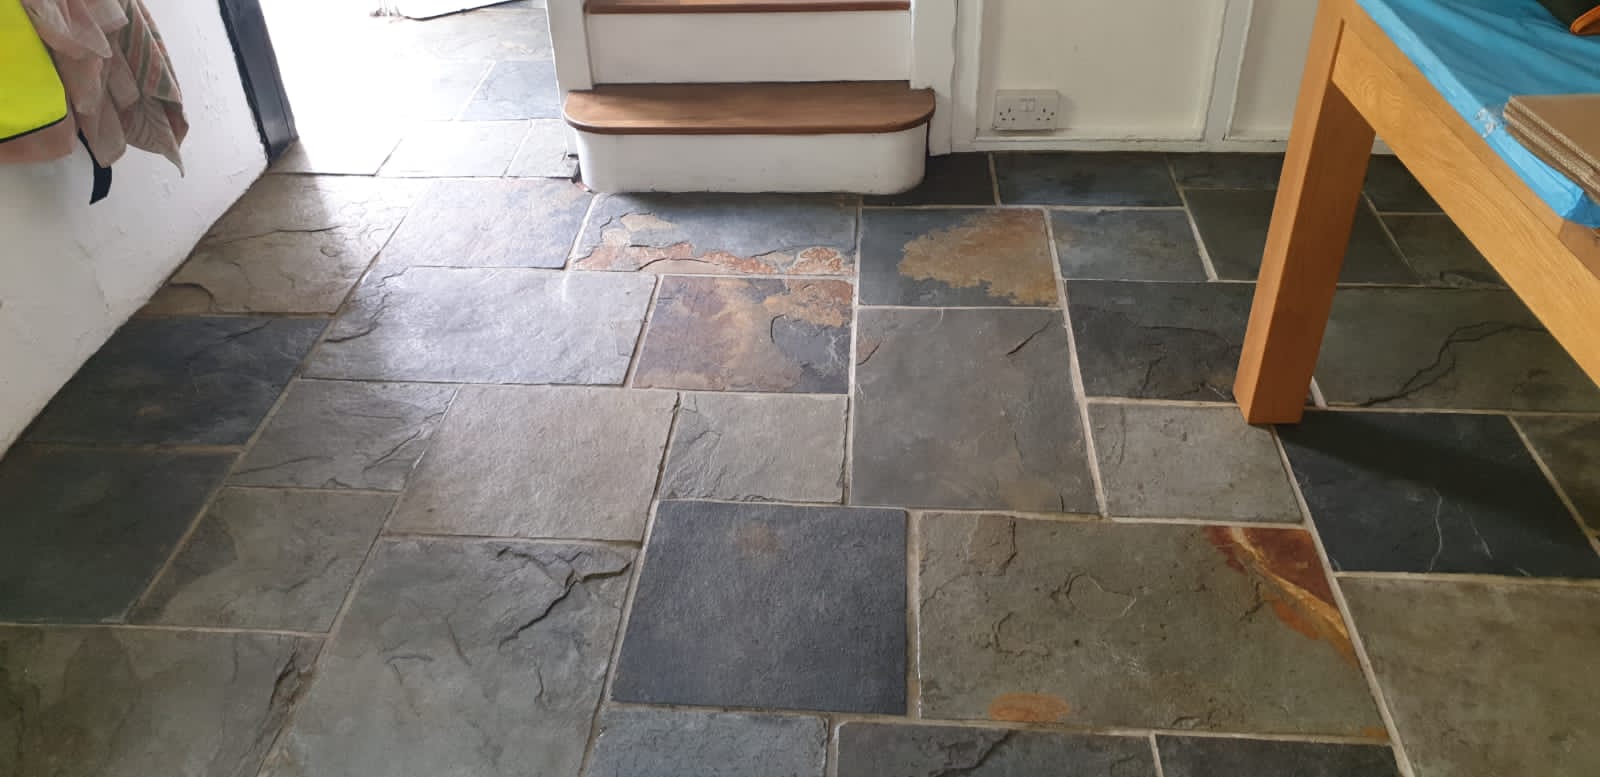 Stone floor cleaned